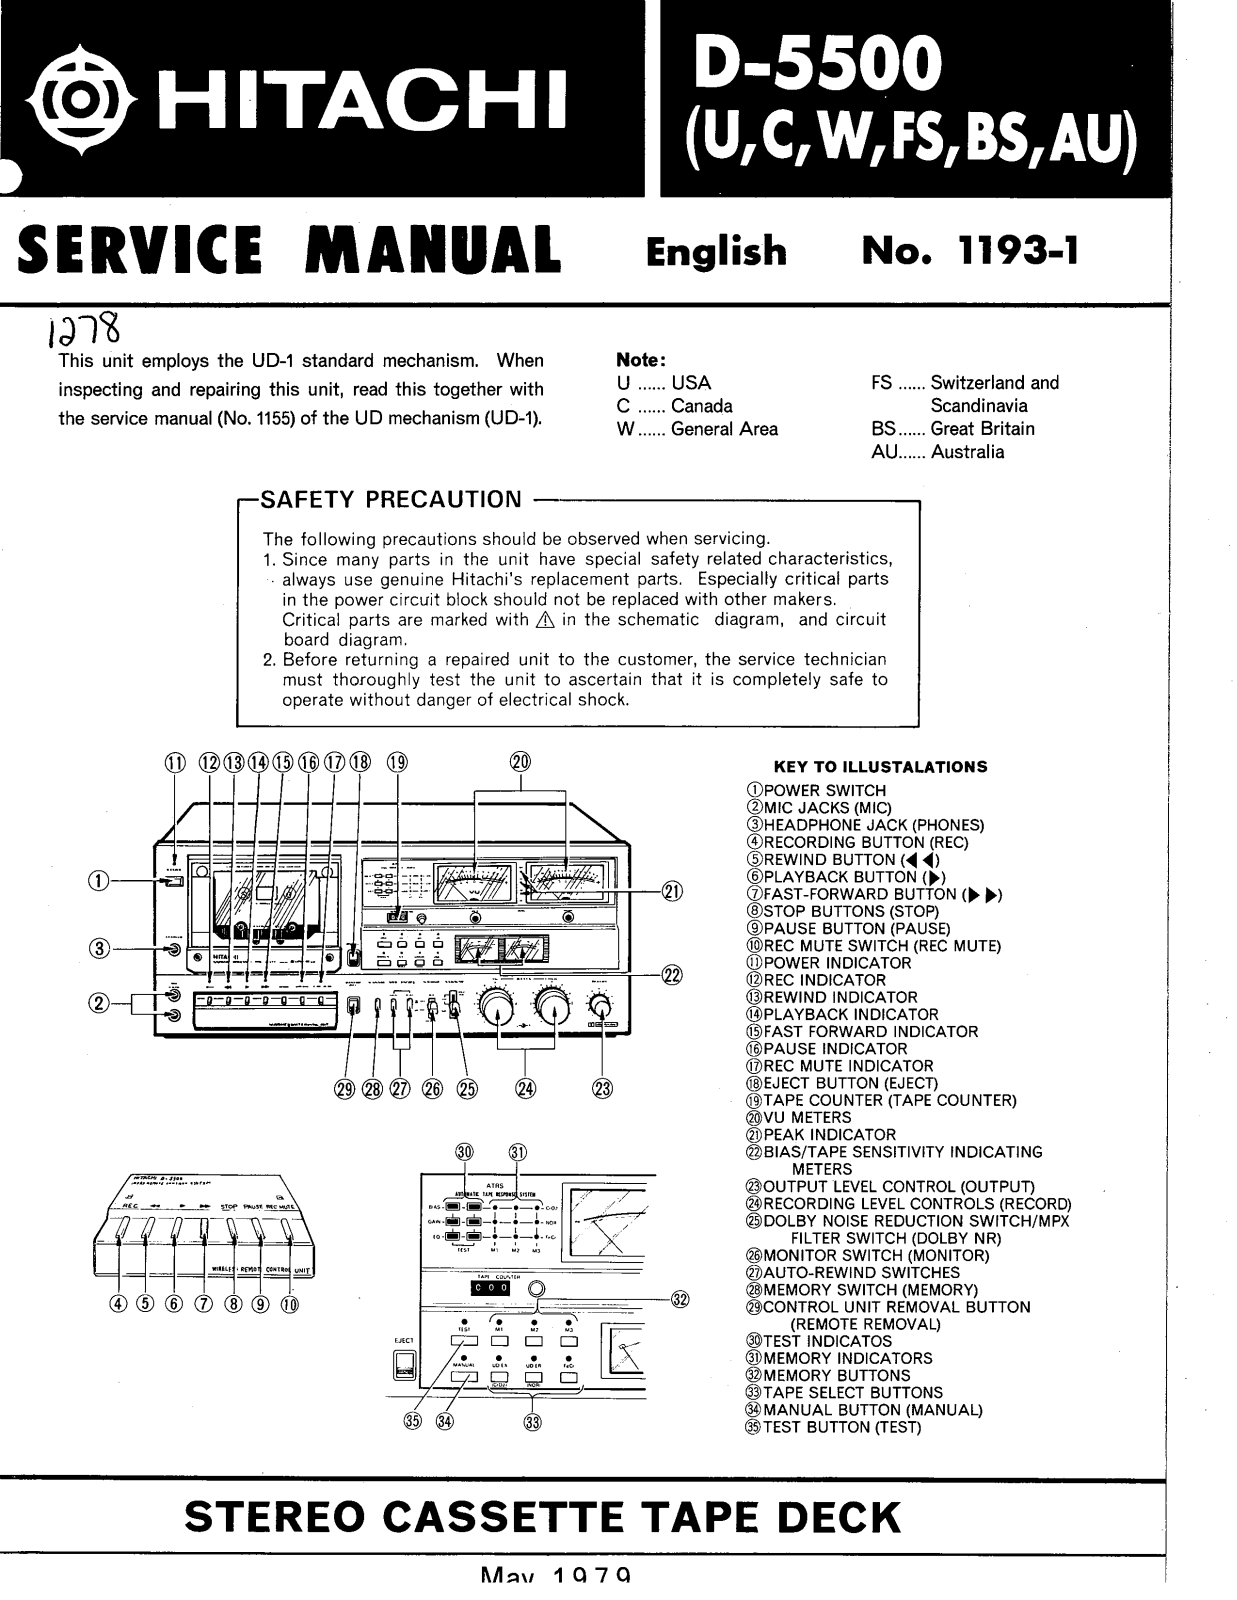 Hitachi D-5500 Service manual